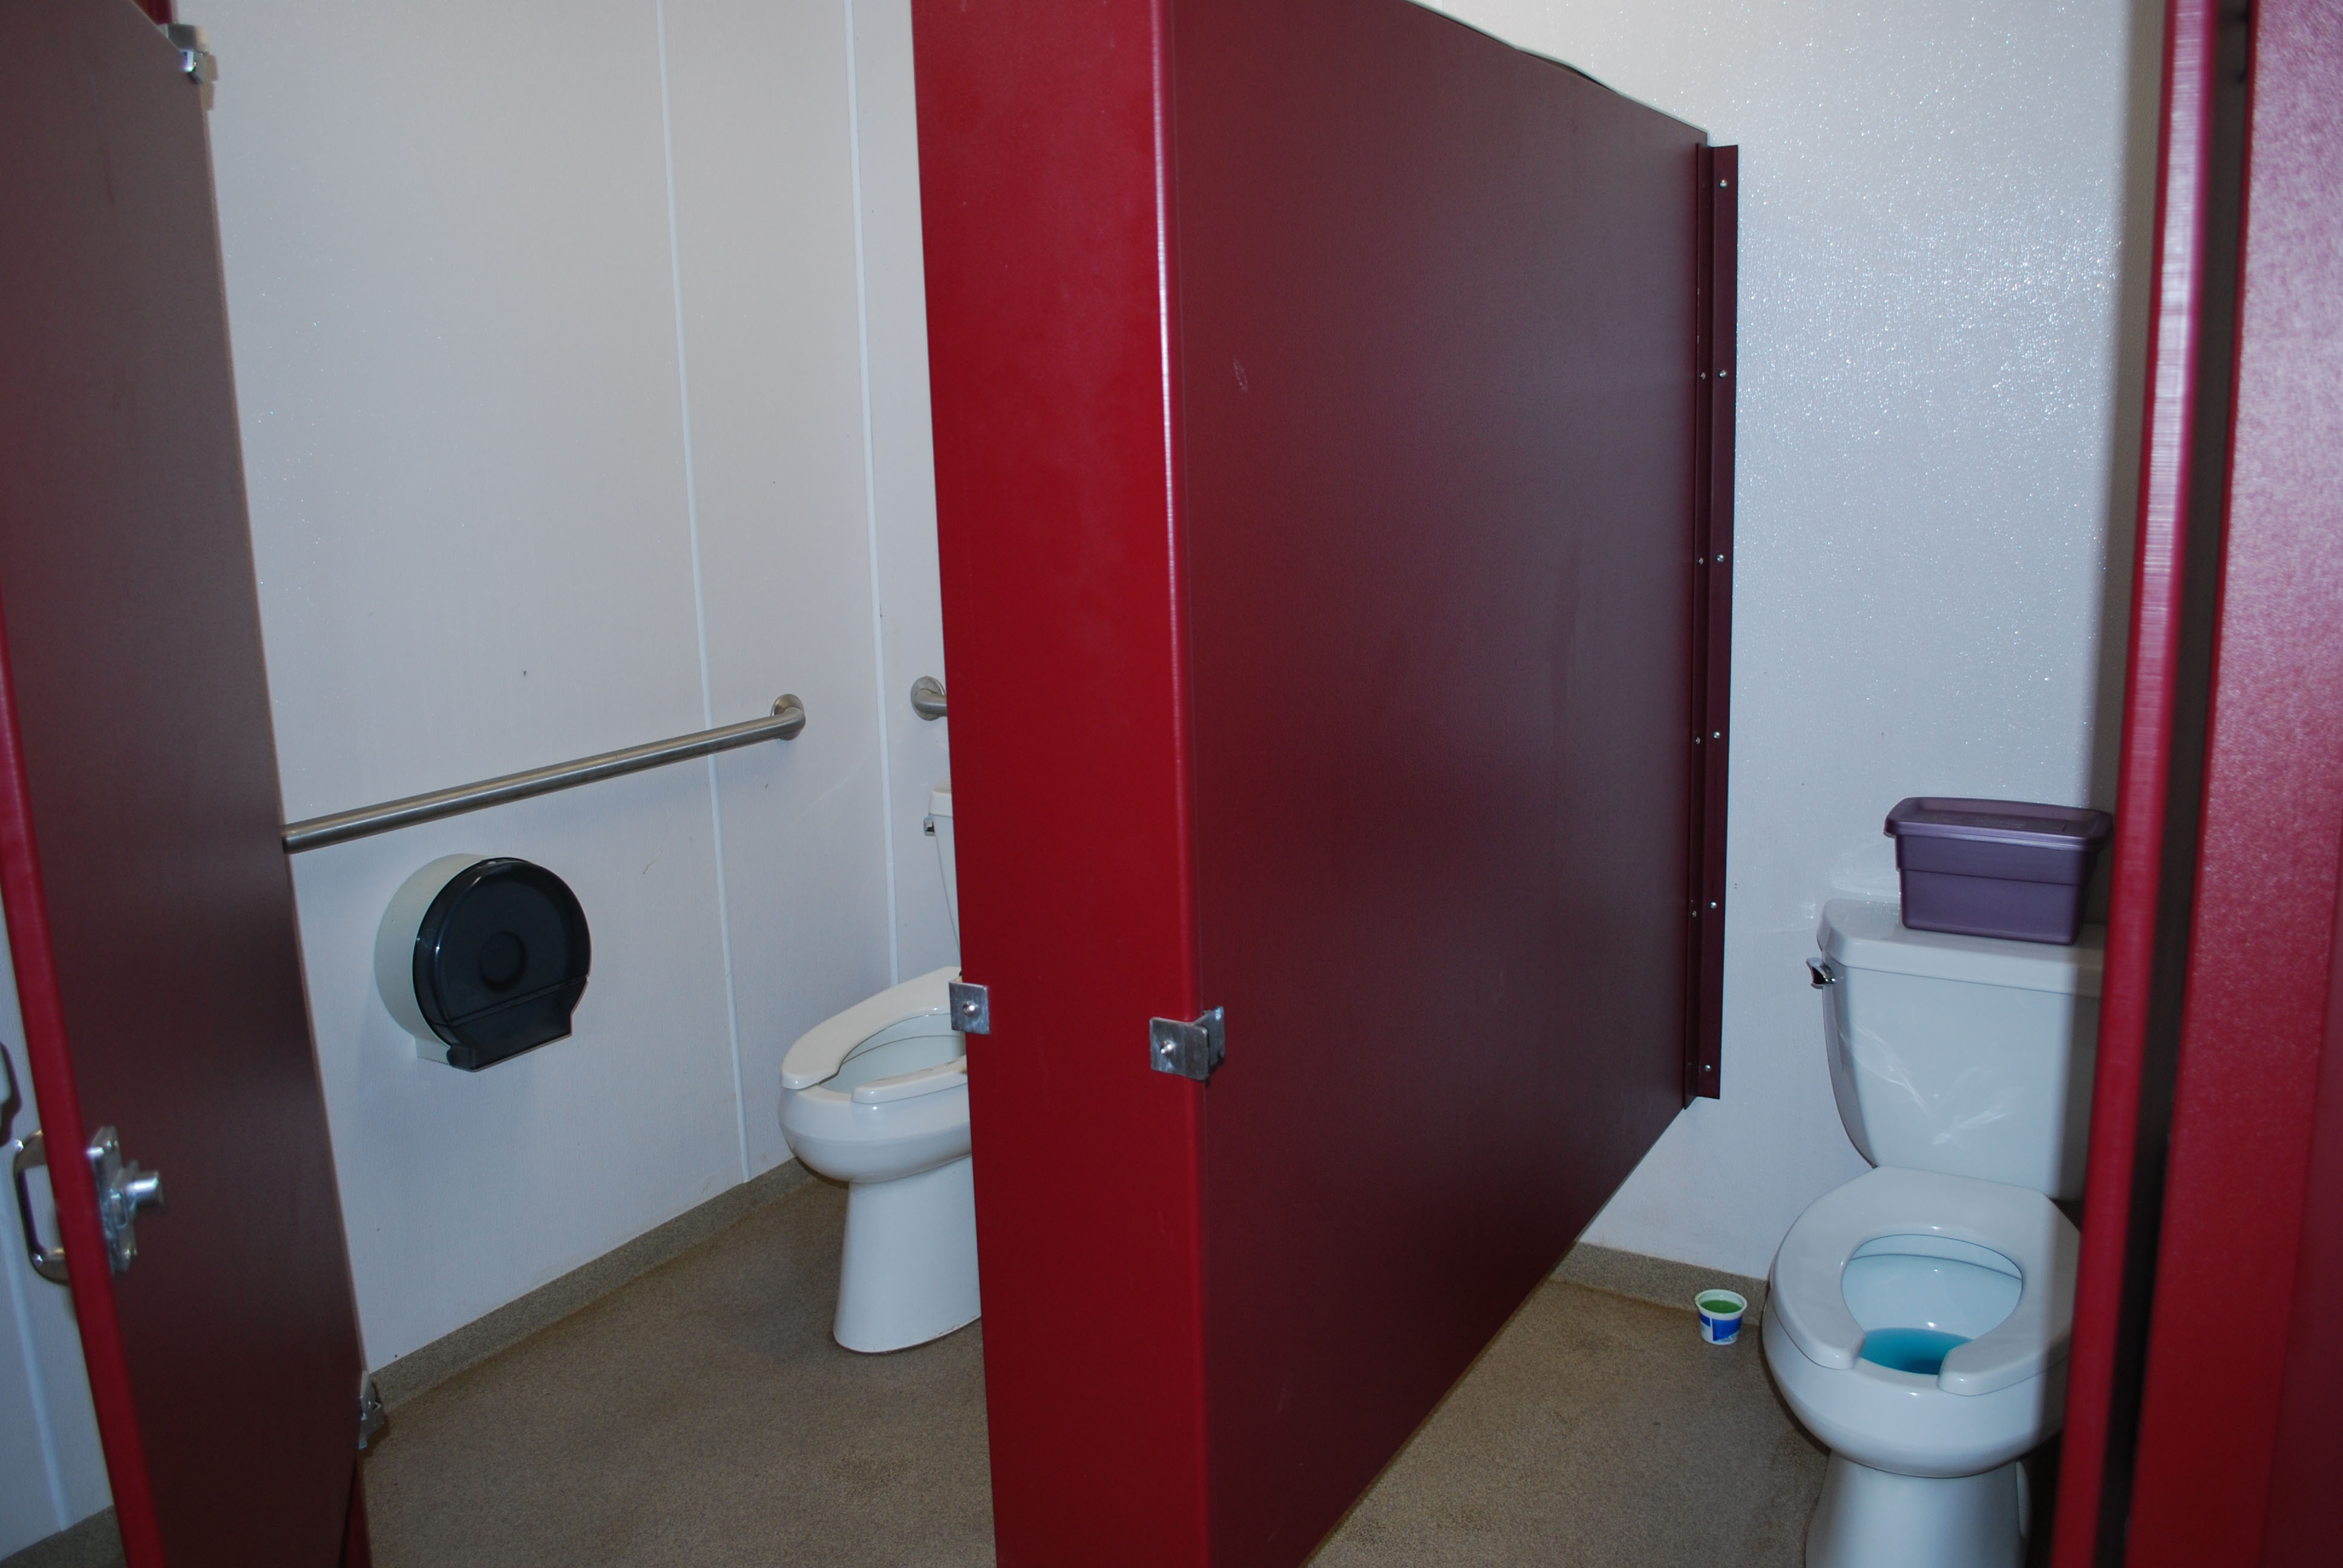 Hester restroom with stalls